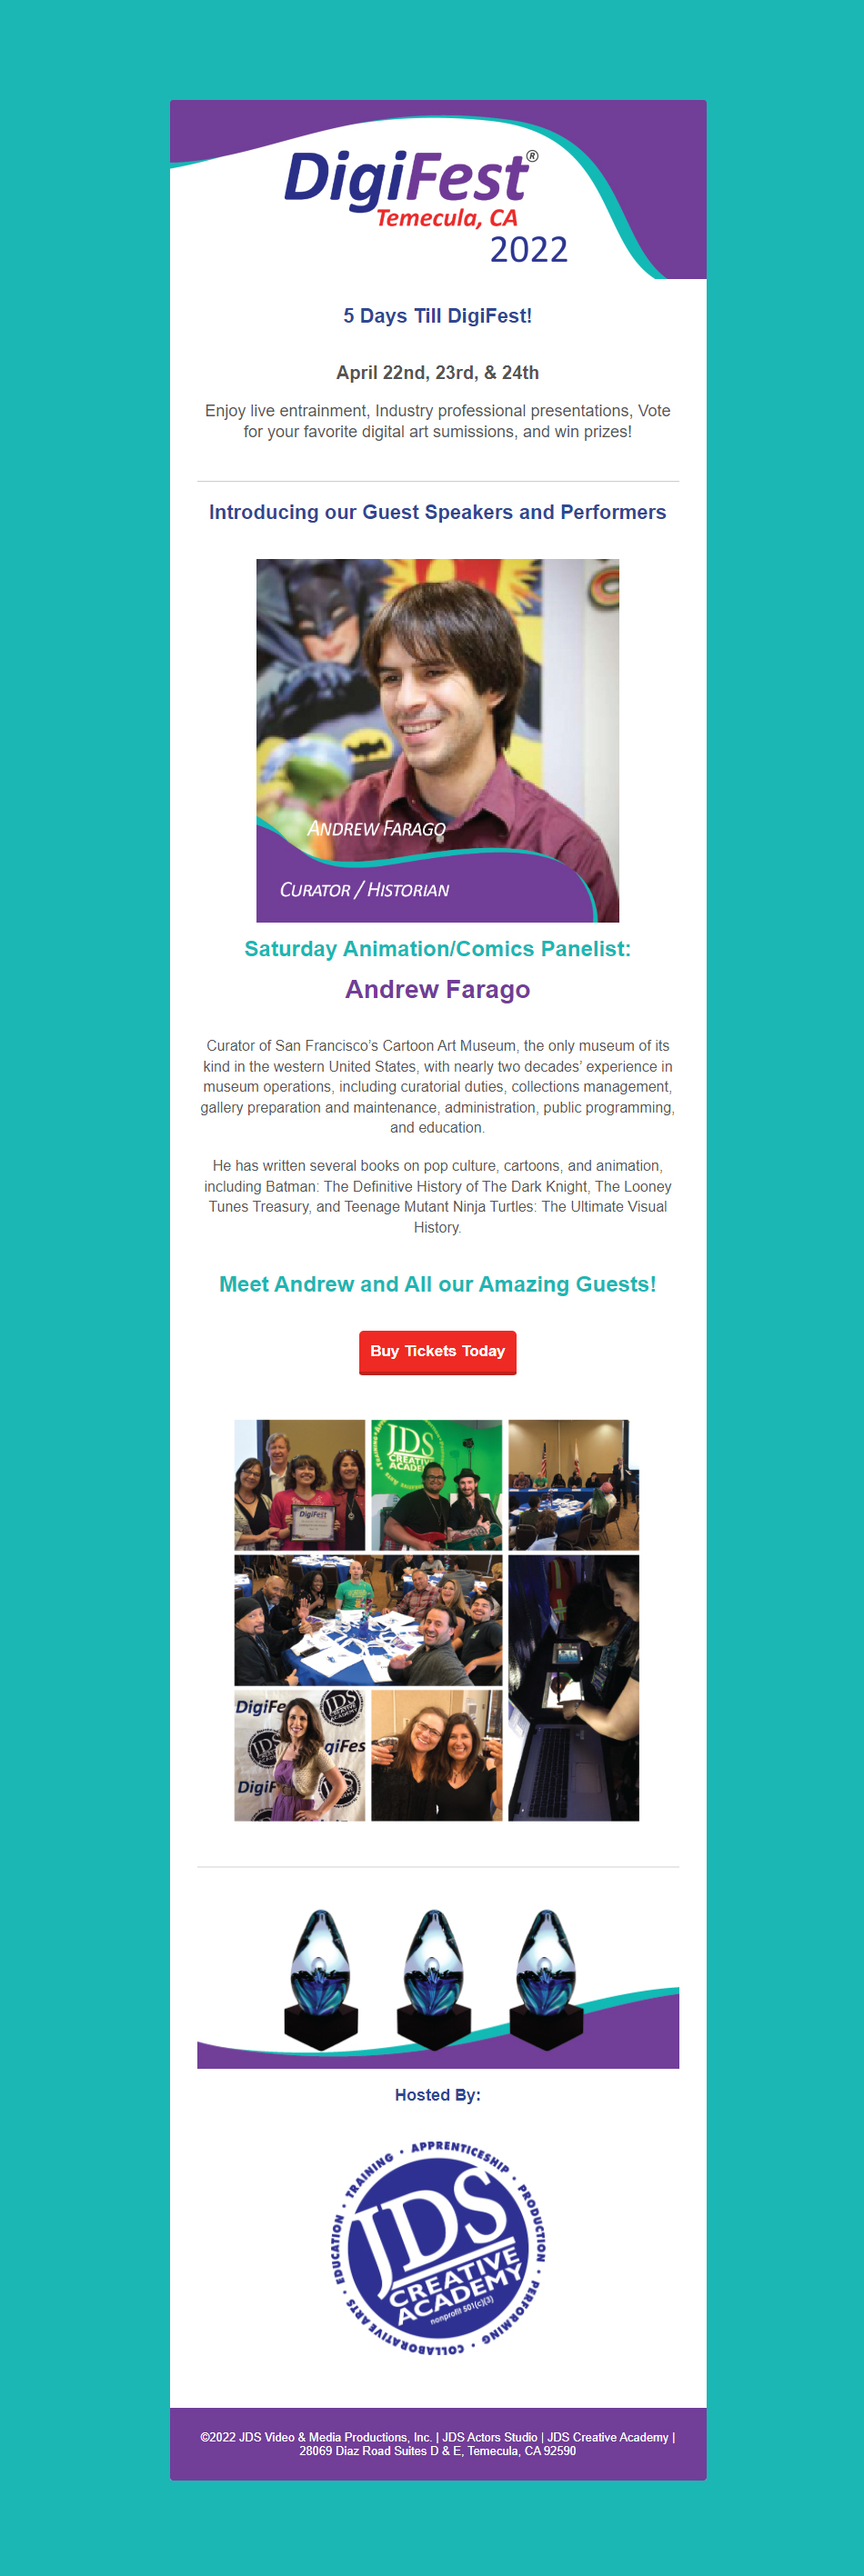 Meet Andrew Farago - 5 Days Till DigiFest!